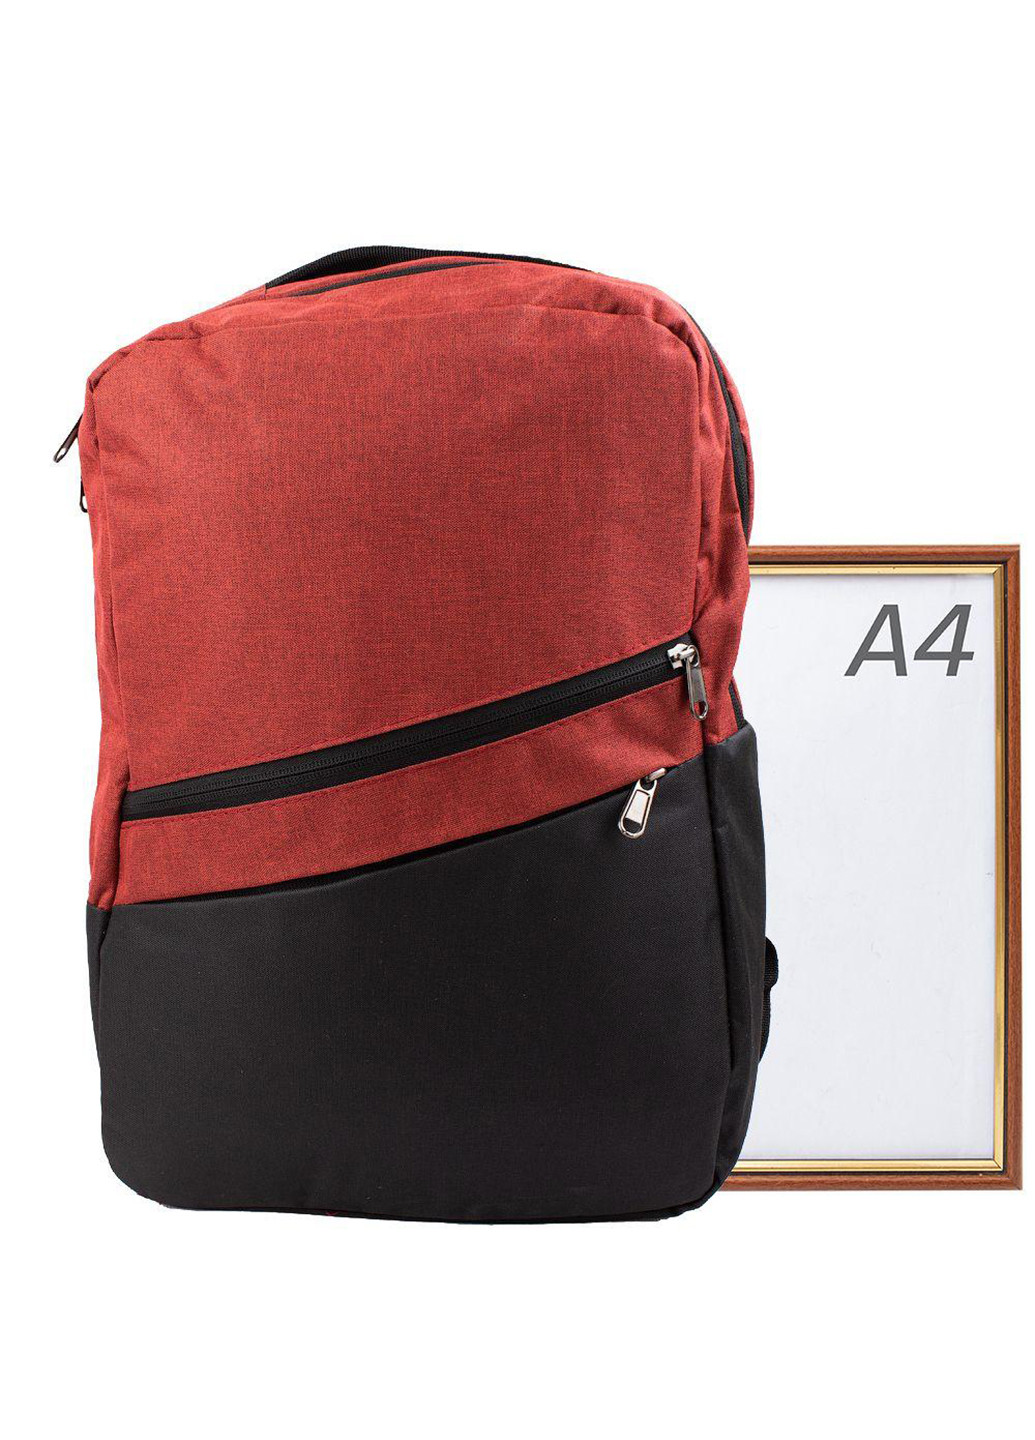 Жіночий смарт-рюкзак 28х40х11 см Valiria Fashion (242189345)